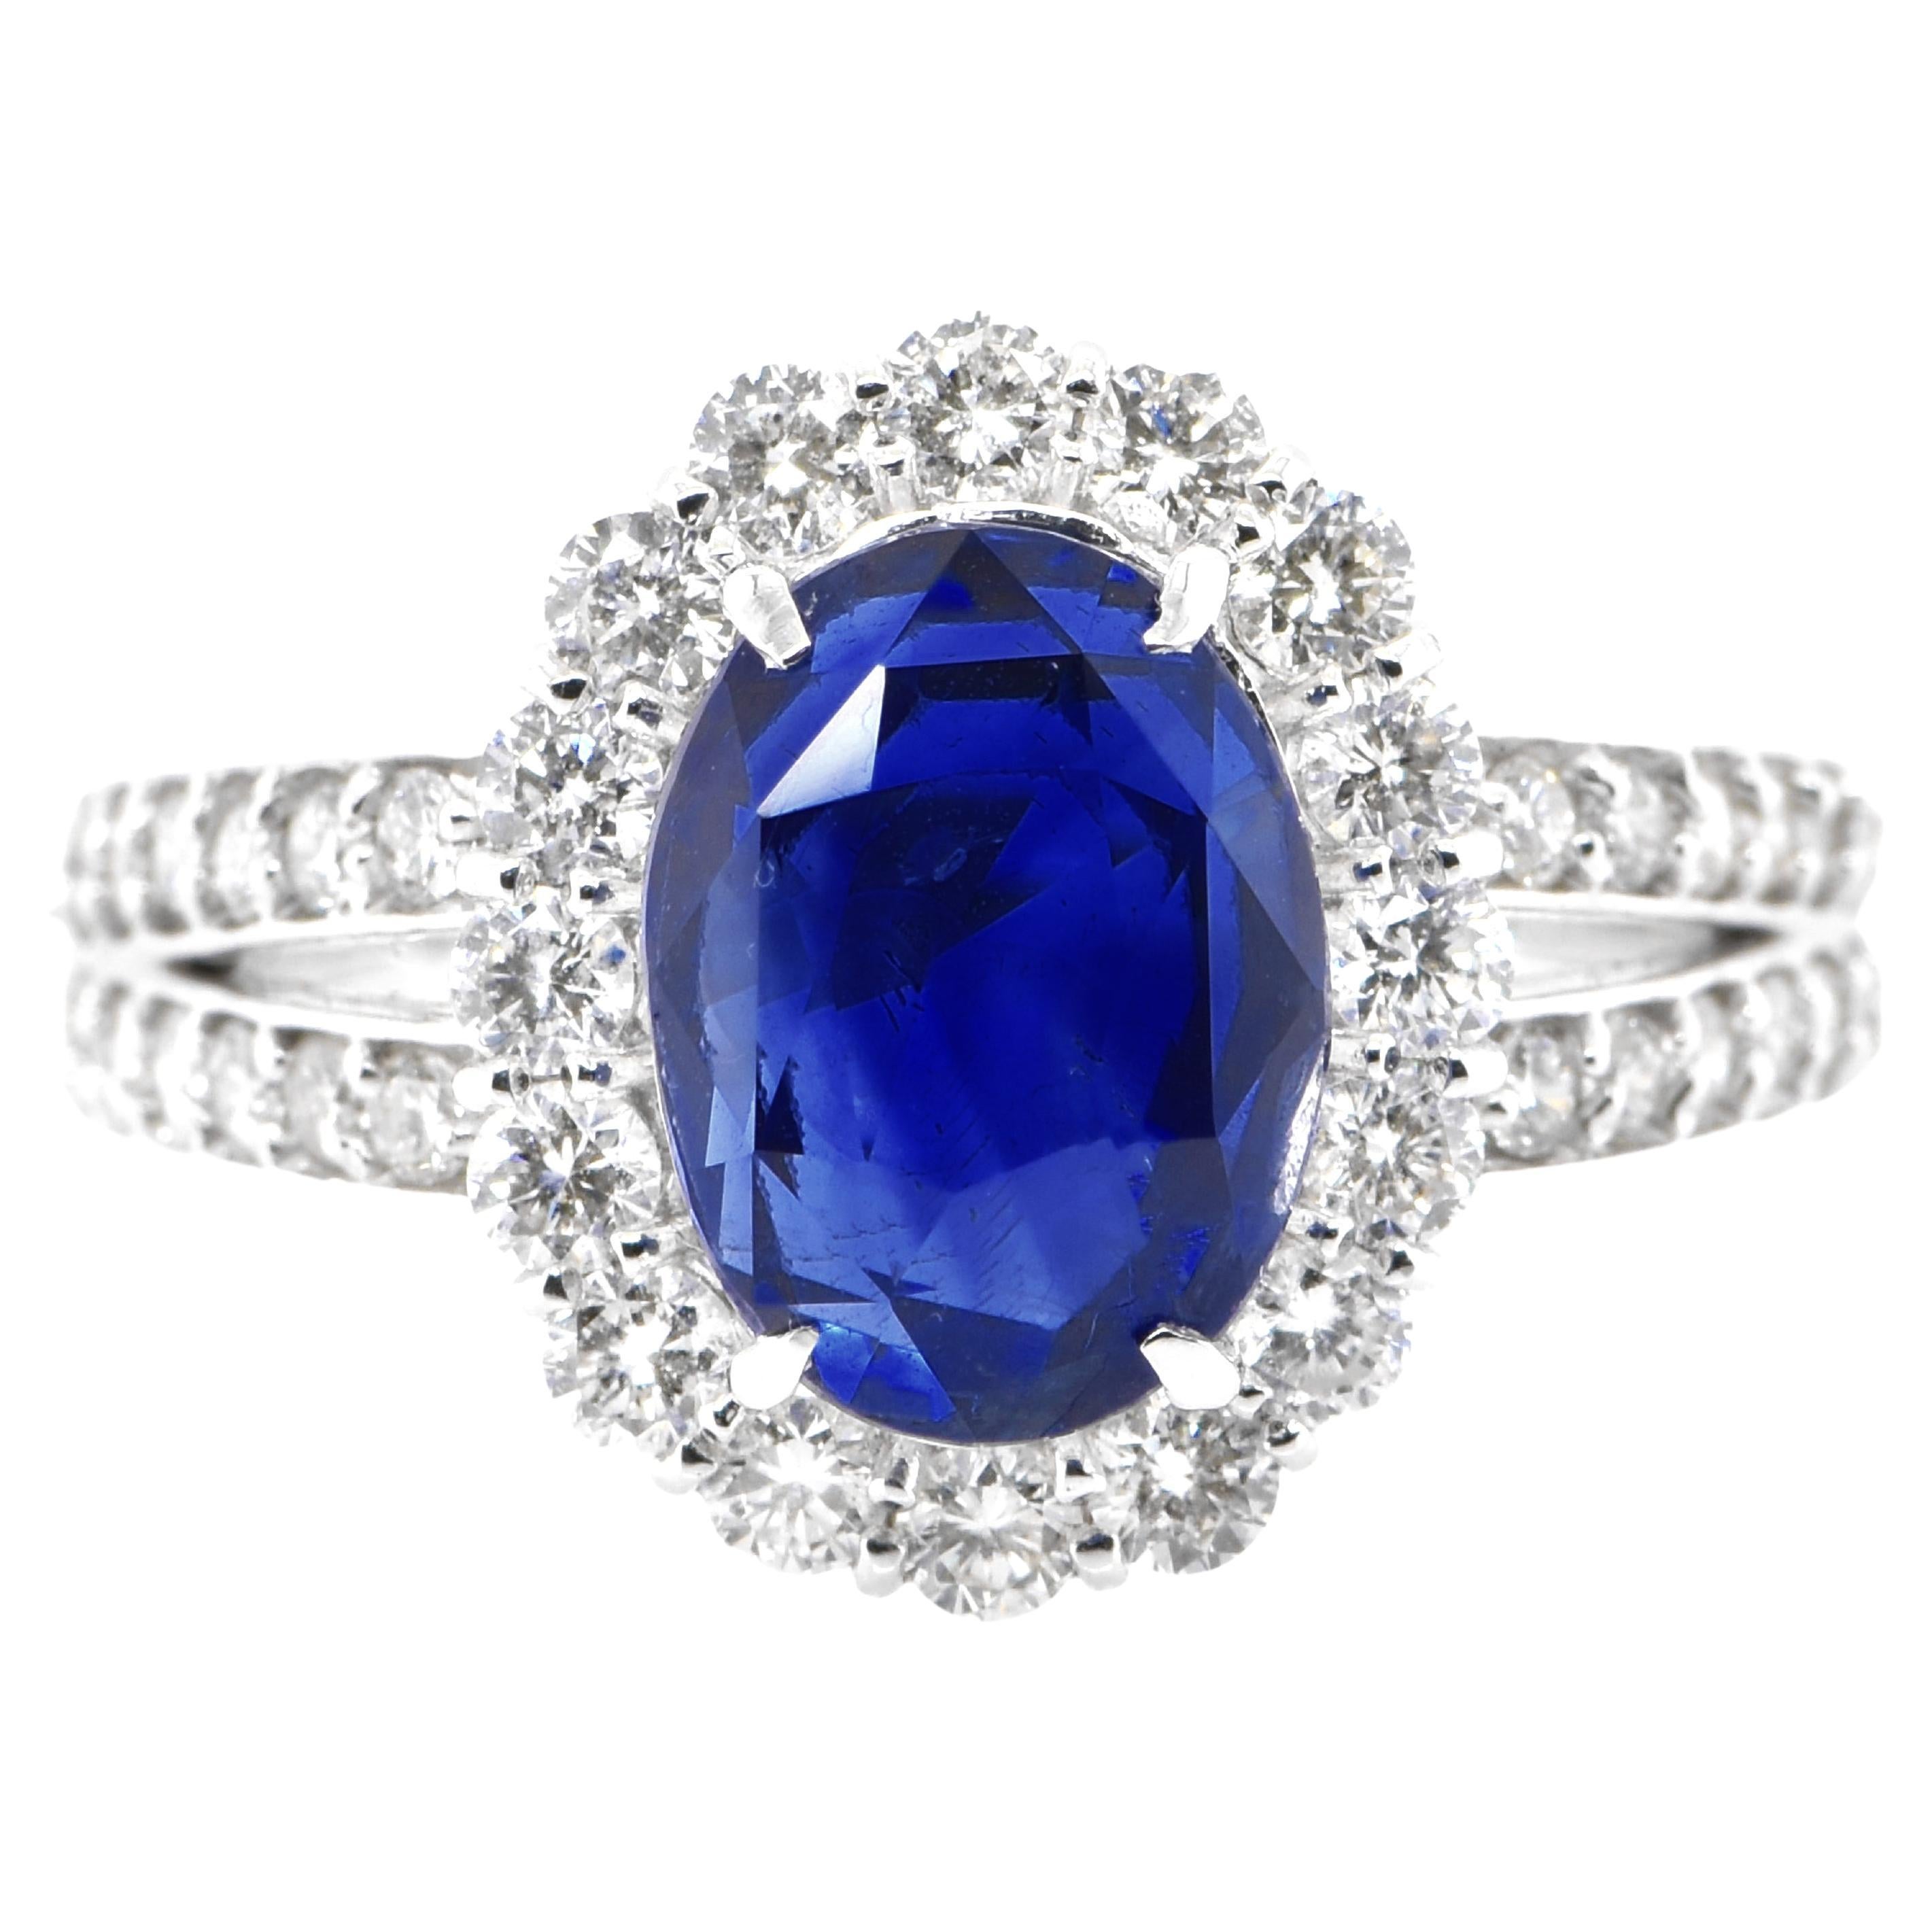 3.85 Carat Natural Sapphire and Diamond Halo Ring Set in Platinum